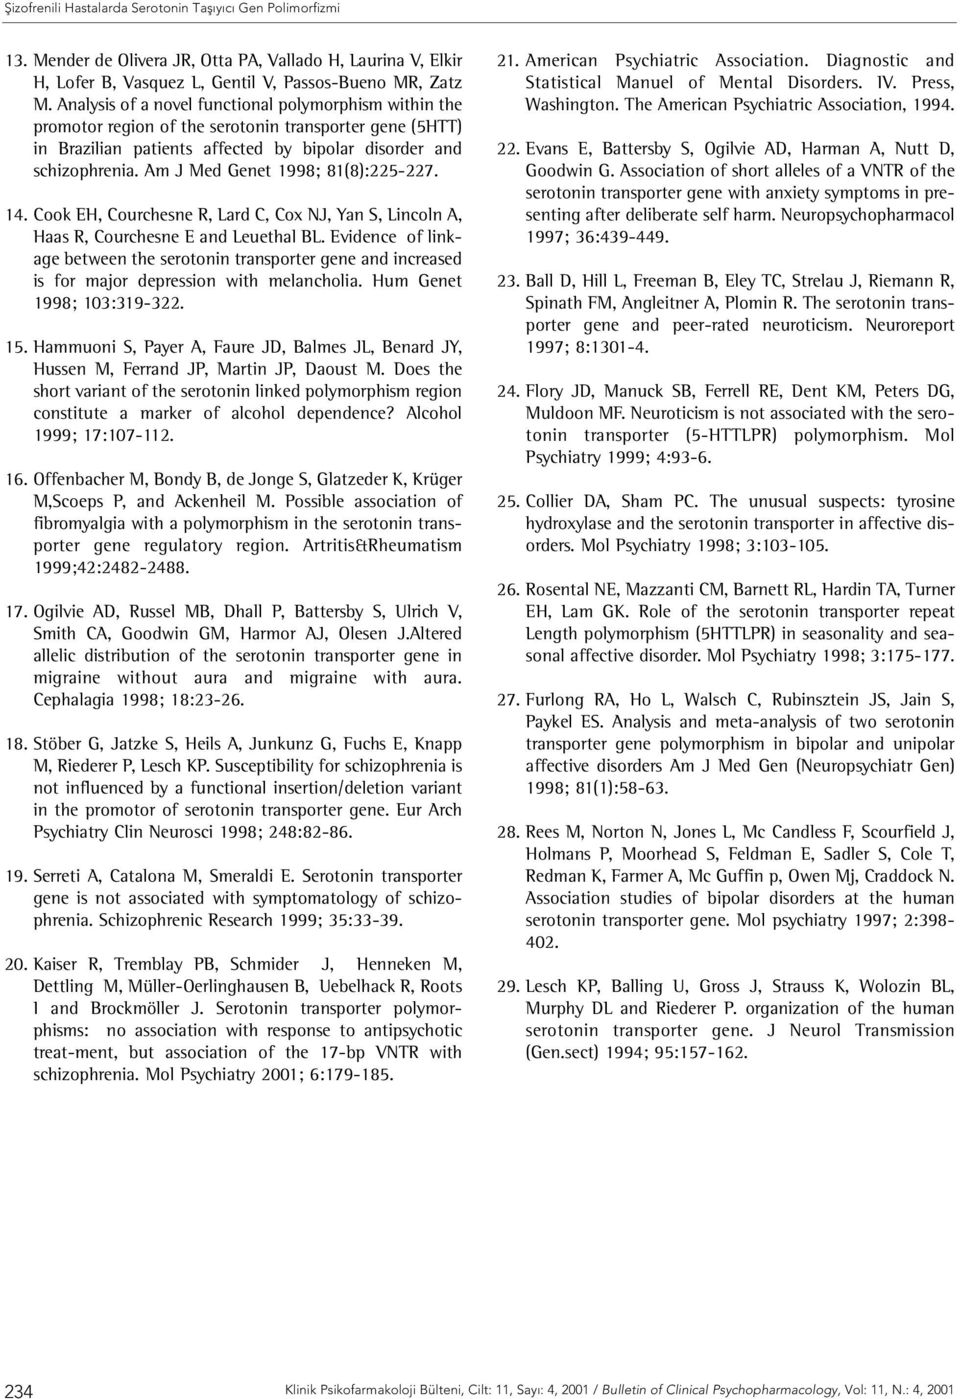 Am J Med Genet 1998; 81(8):225-227. 14. Cook EH, Courchesne R, Lard C, Cox NJ, Yan S, Lincoln A, Haas R, Courchesne E and Leuethal BL.